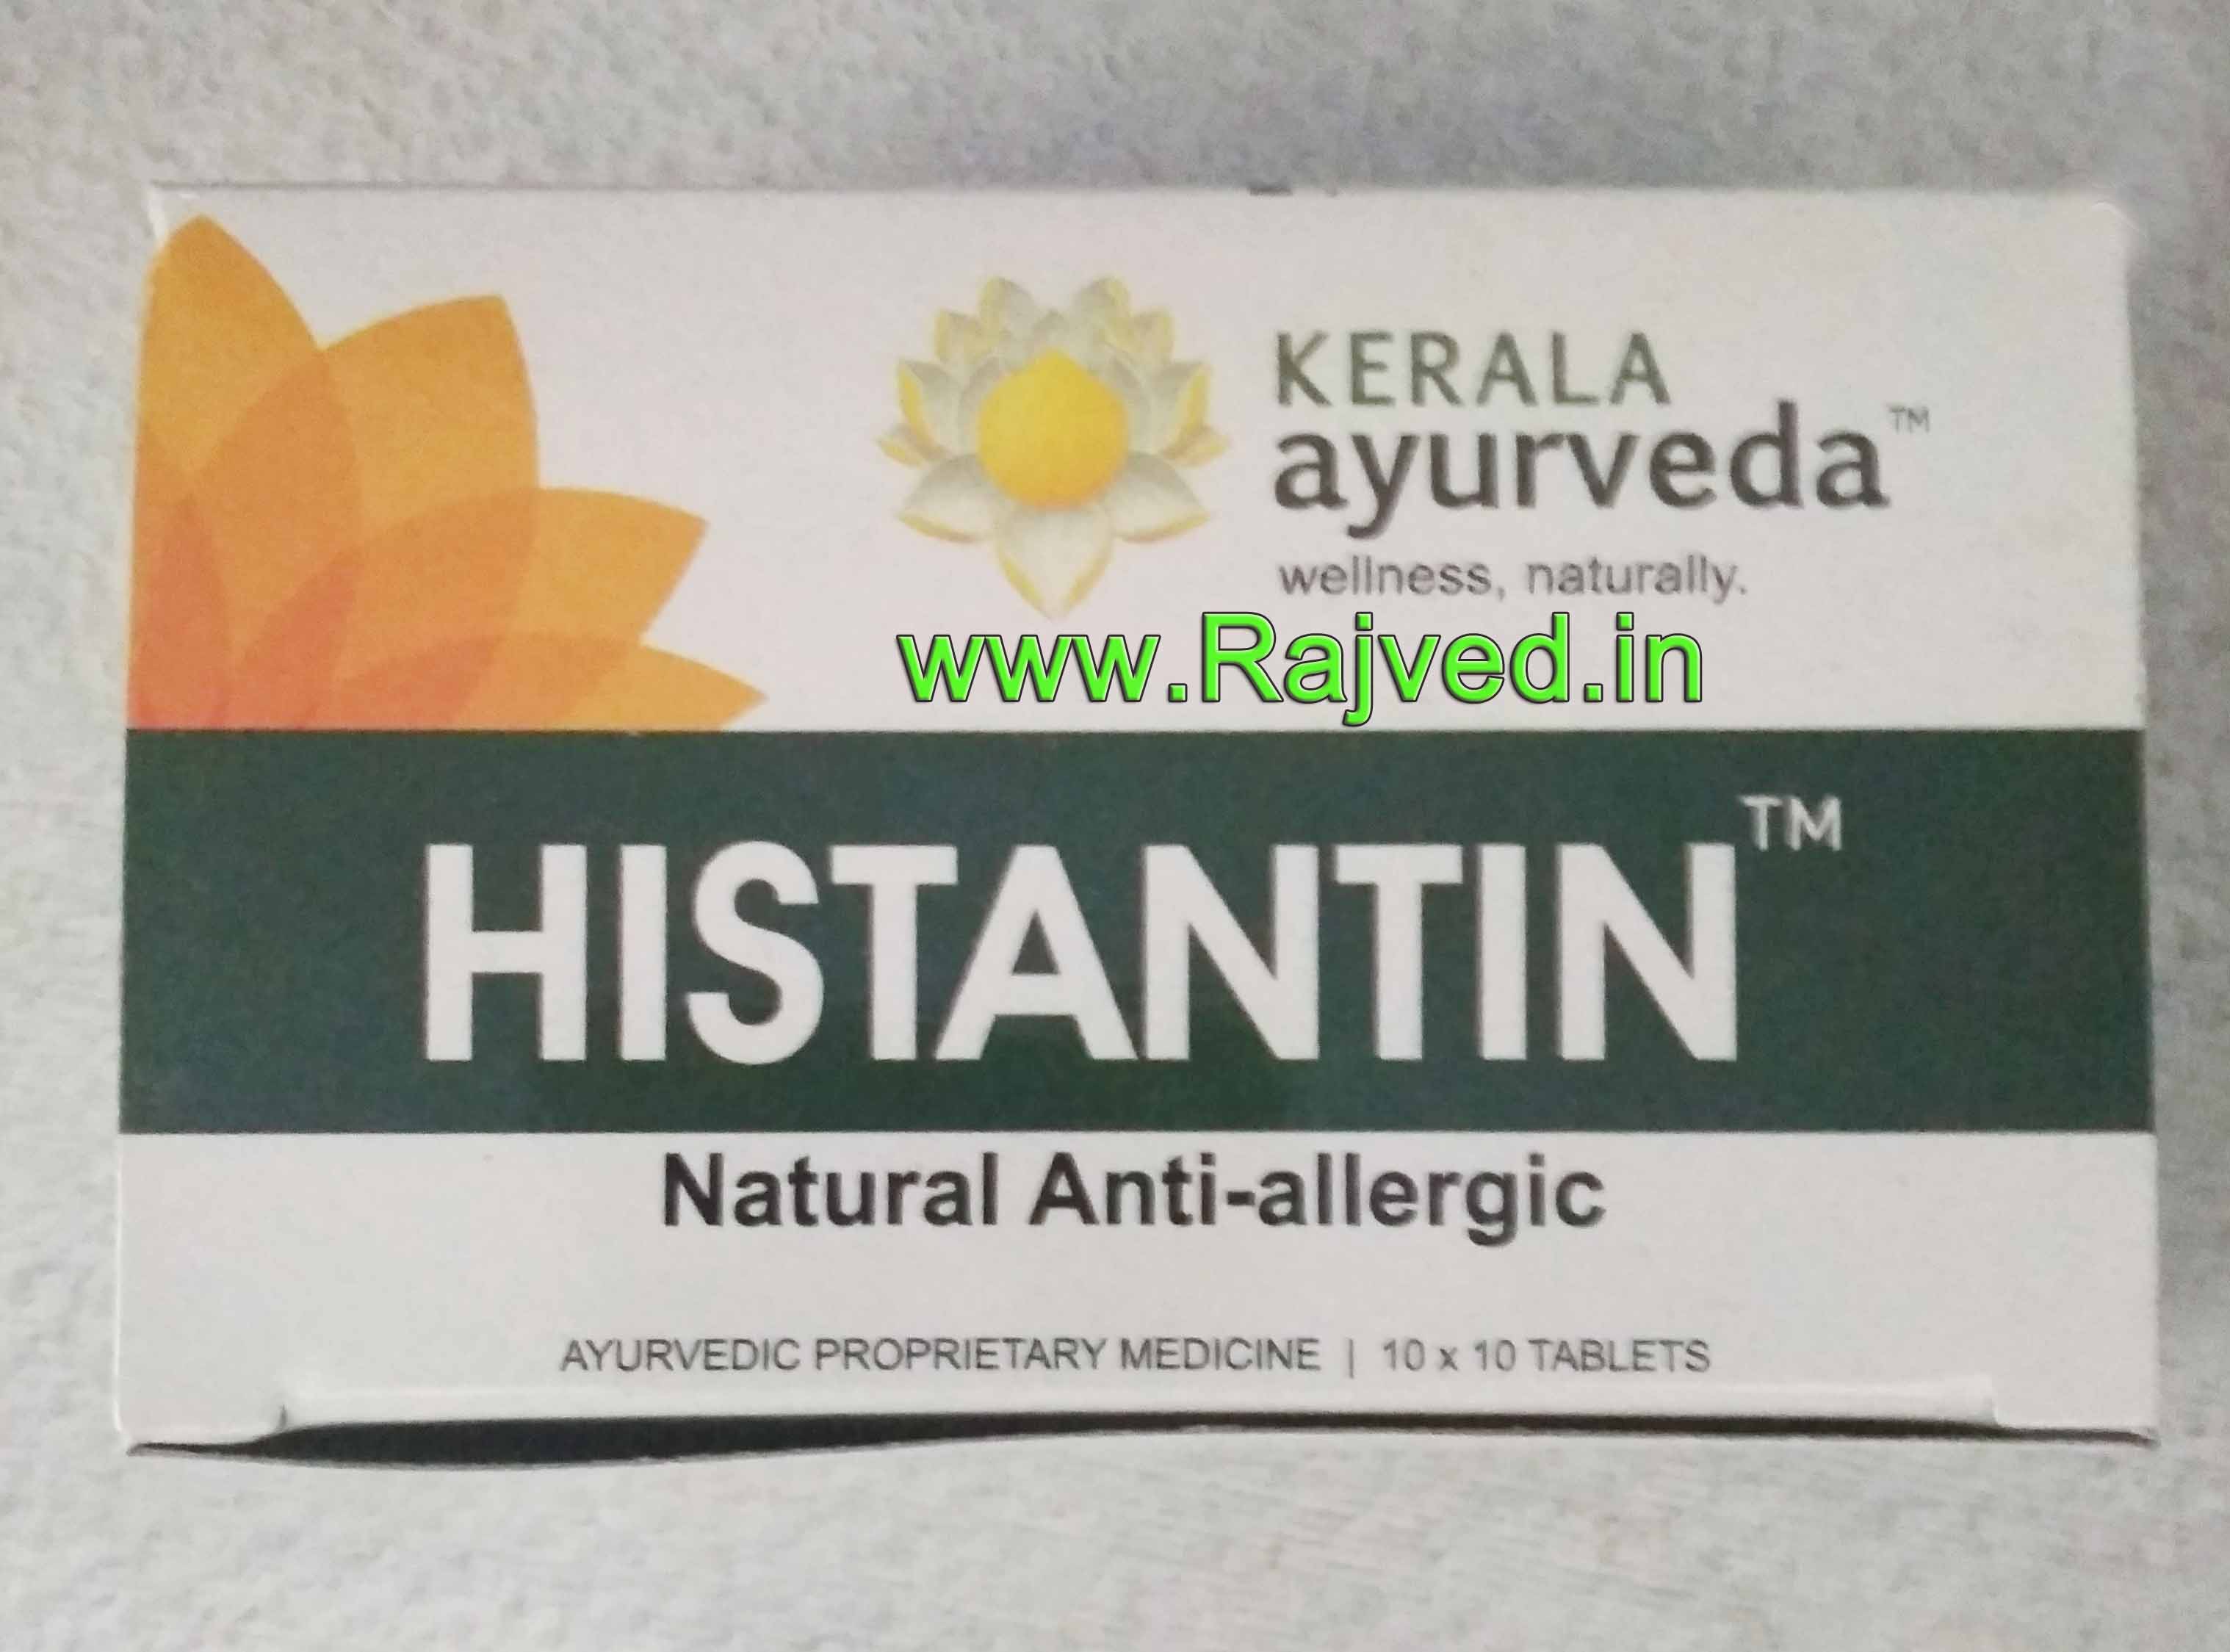 histantin tablet 1000 tab upto 15% off kerala ayurveda Ltd